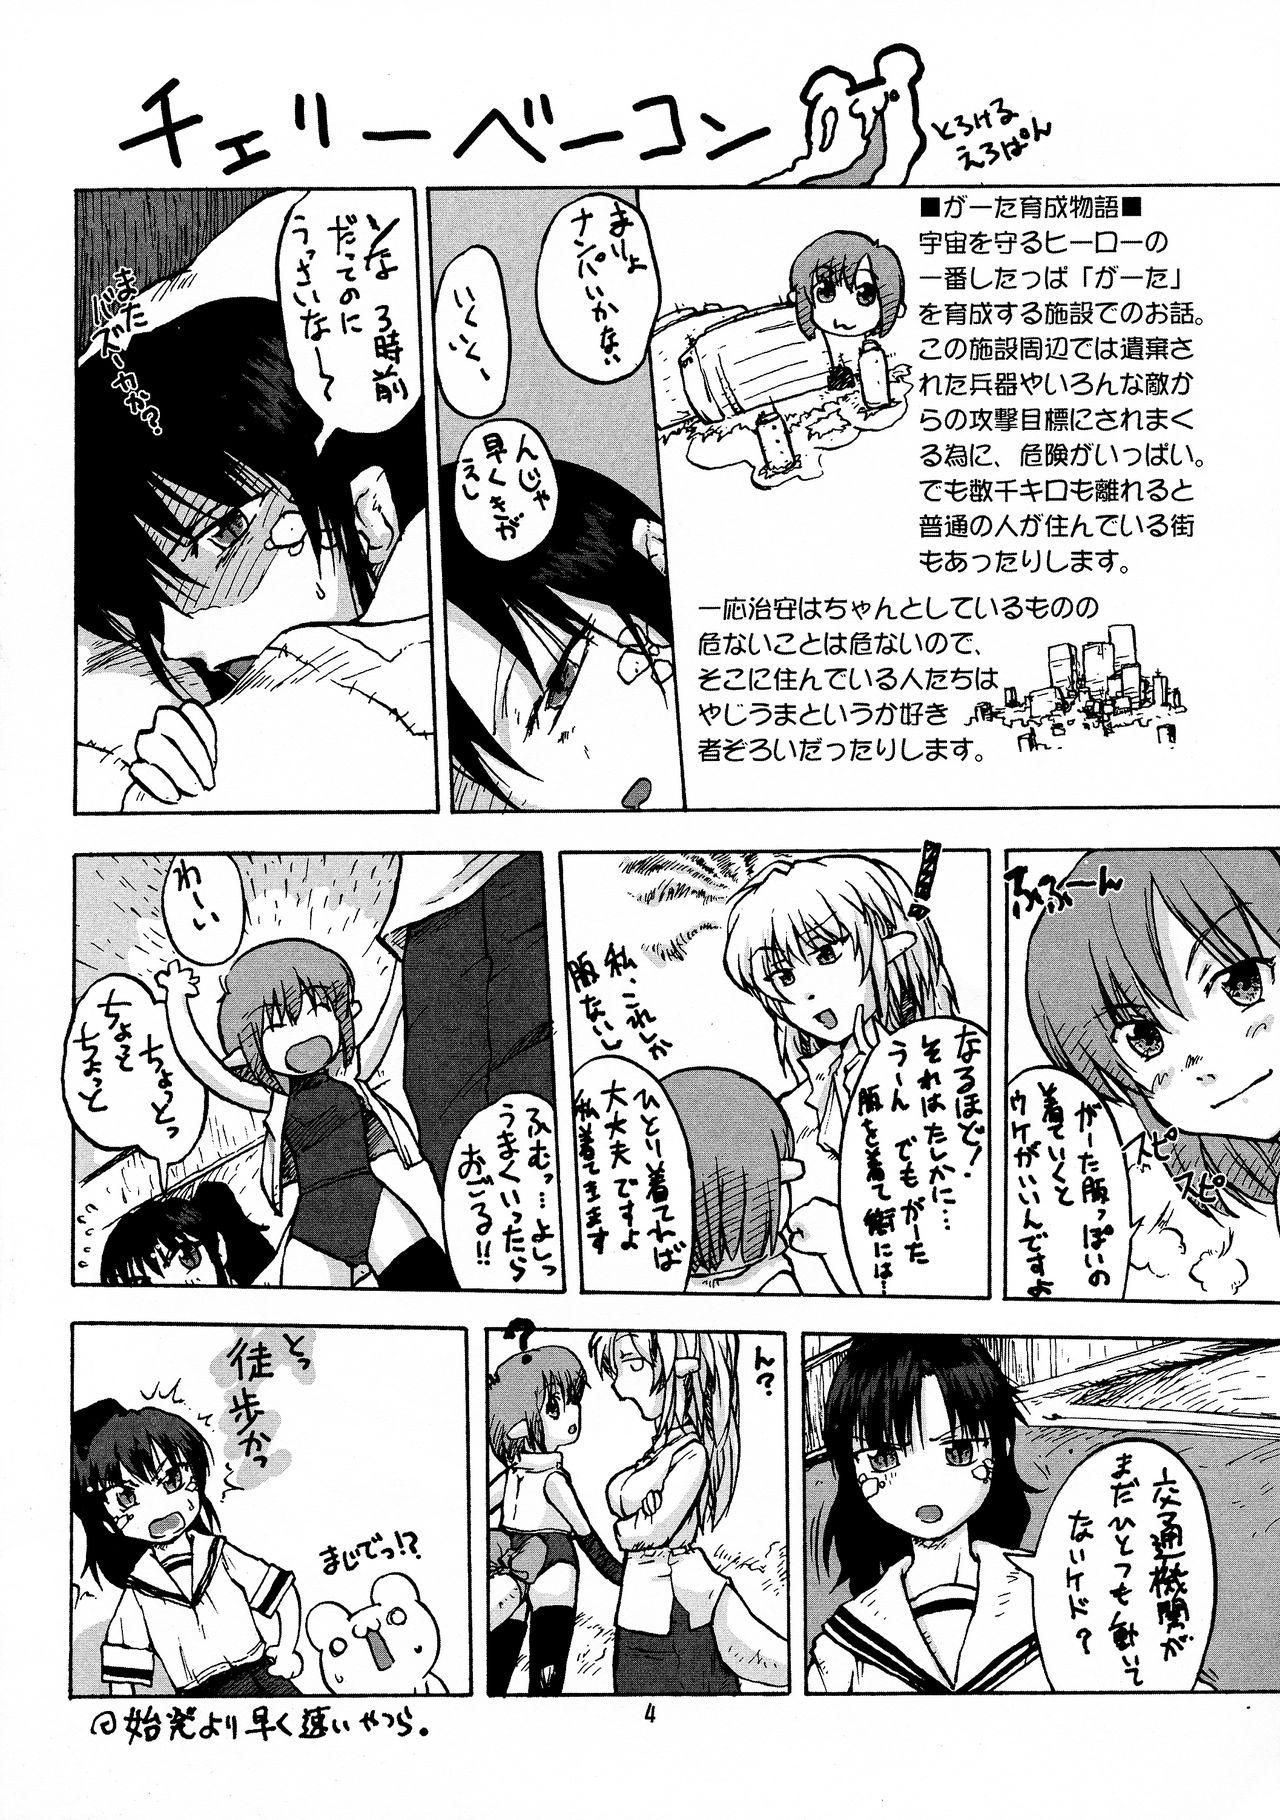 Manga Chocolate Bustier vol. 2 3